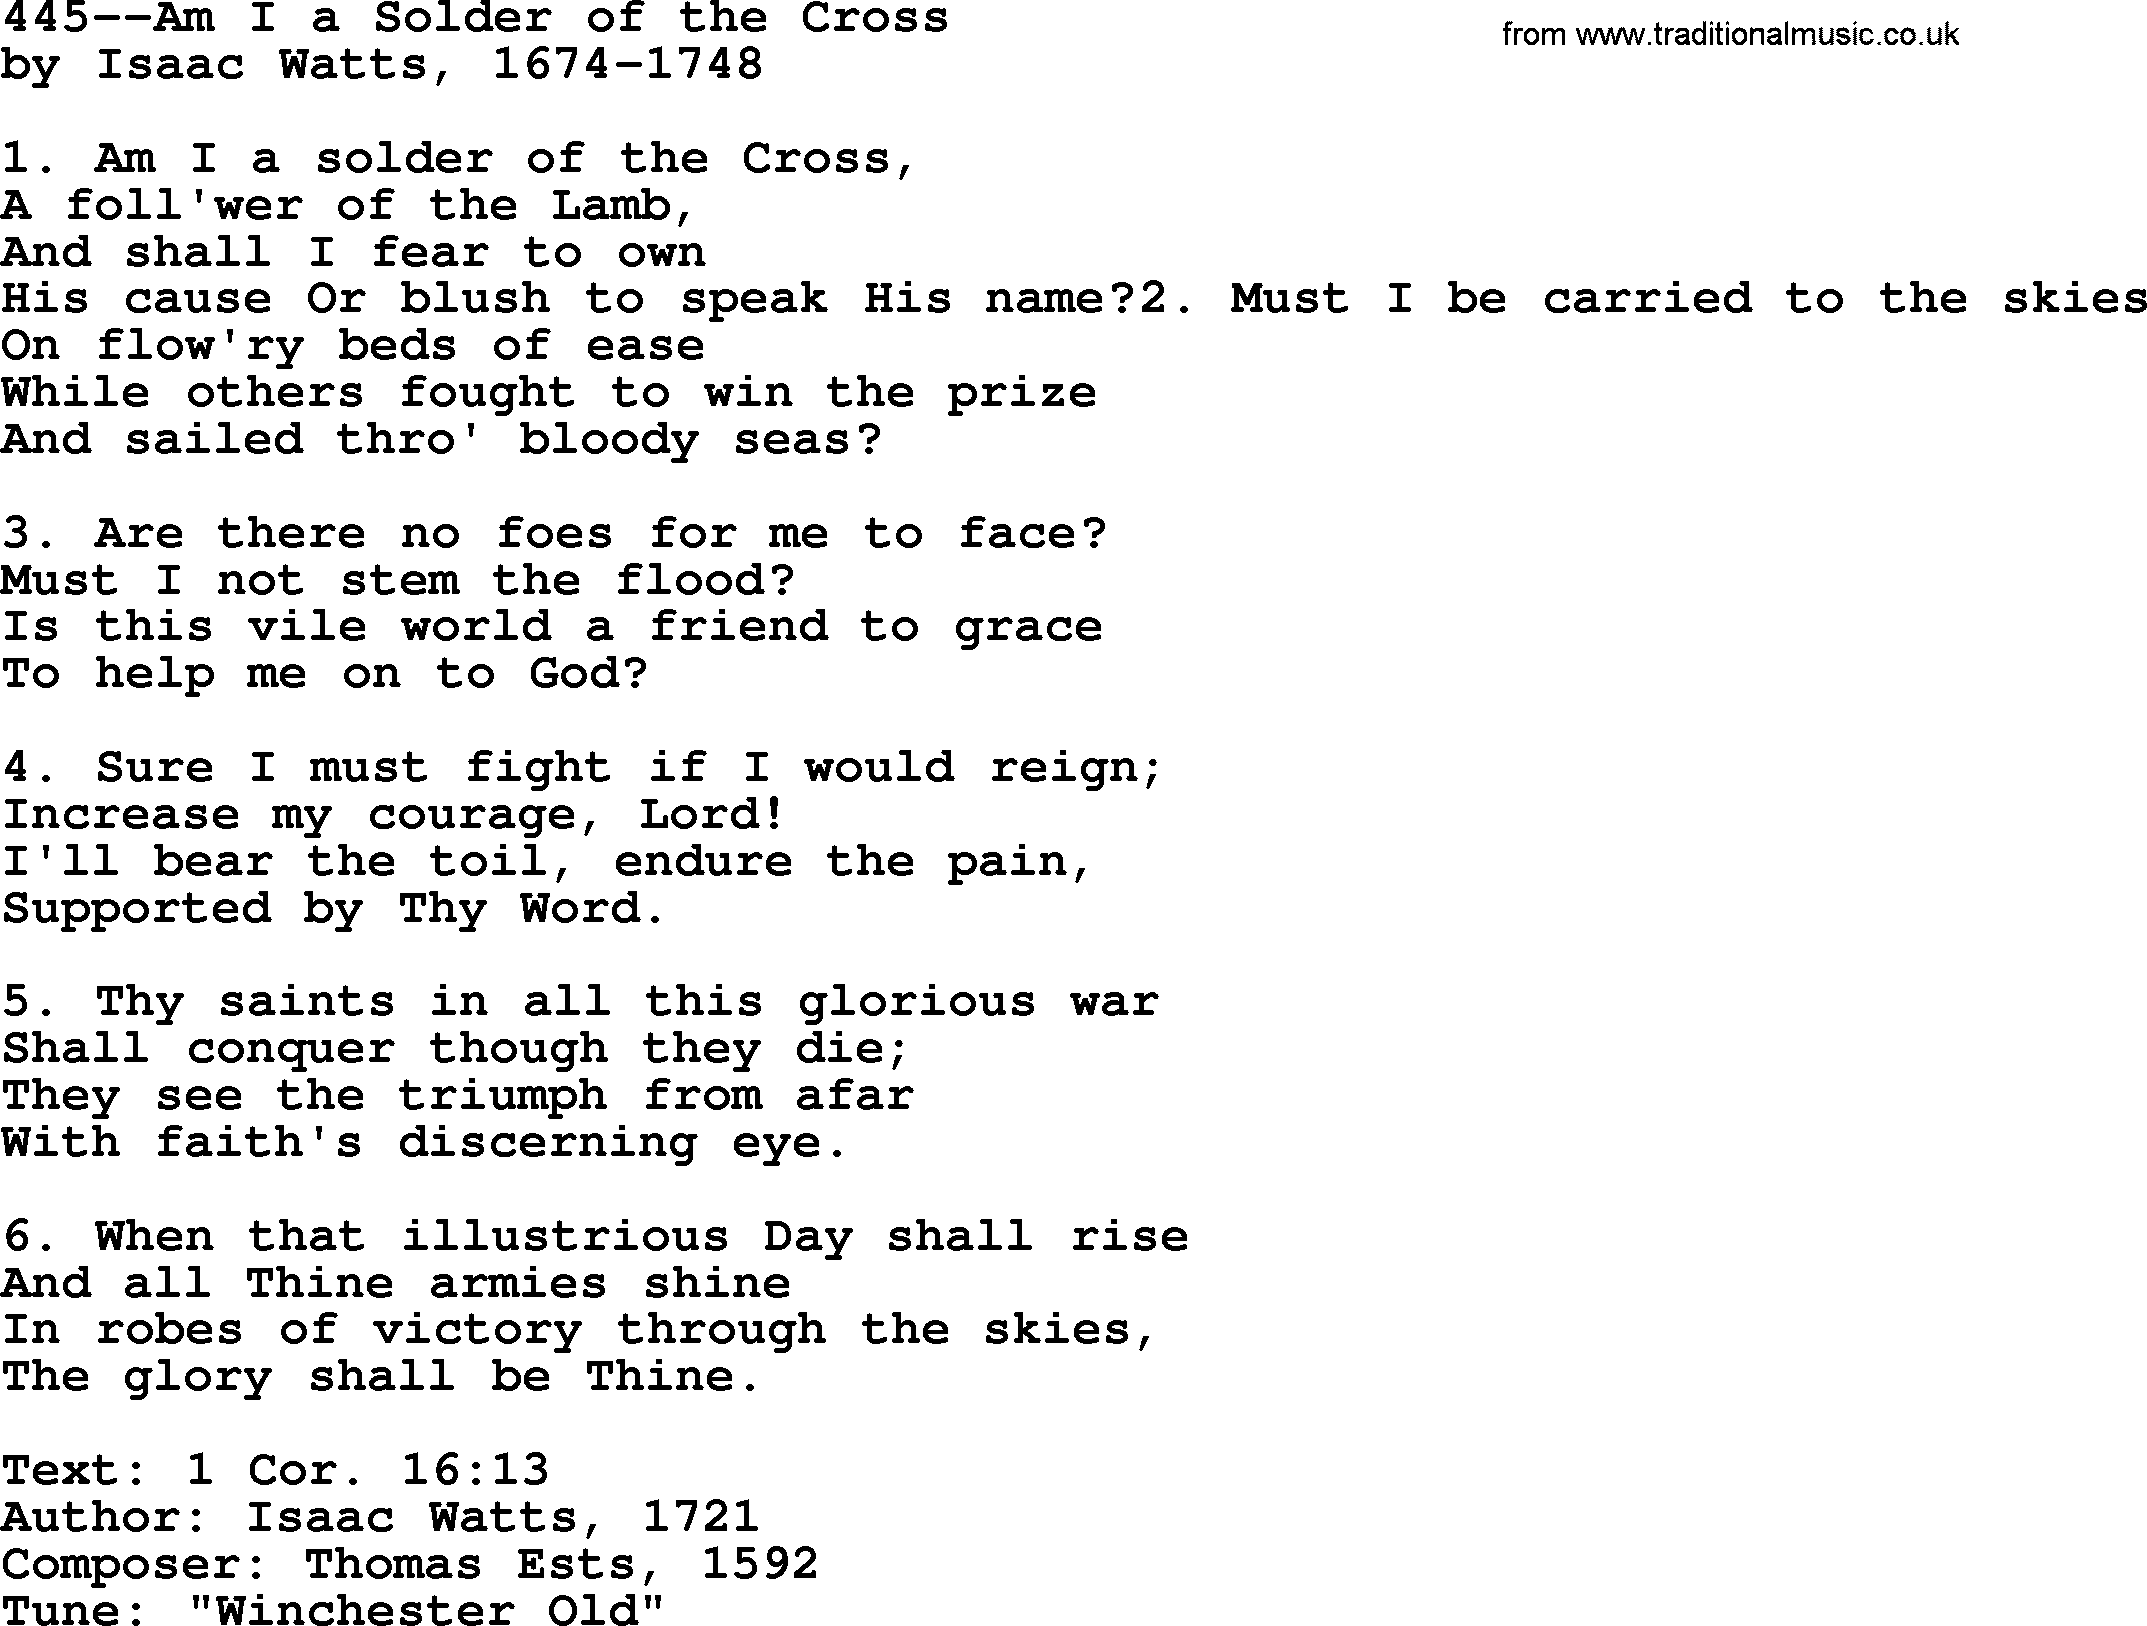 Lutheran Hymn: 445--Am I a Solder of the Cross.txt lyrics with PDF